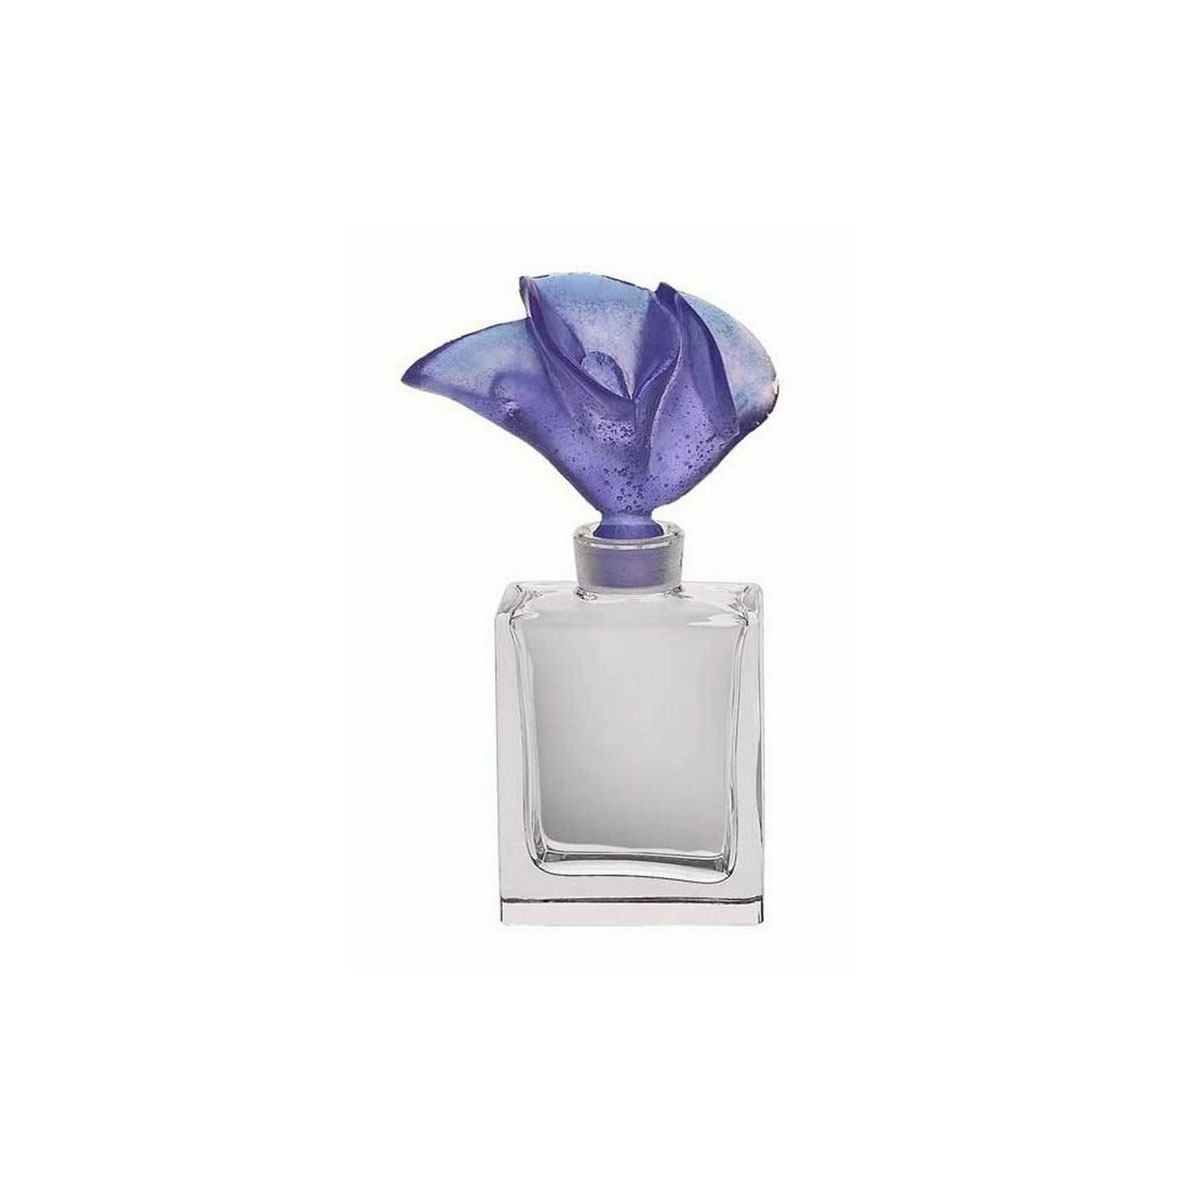 Daum Arum Perfume Bottle in Ultraviolet